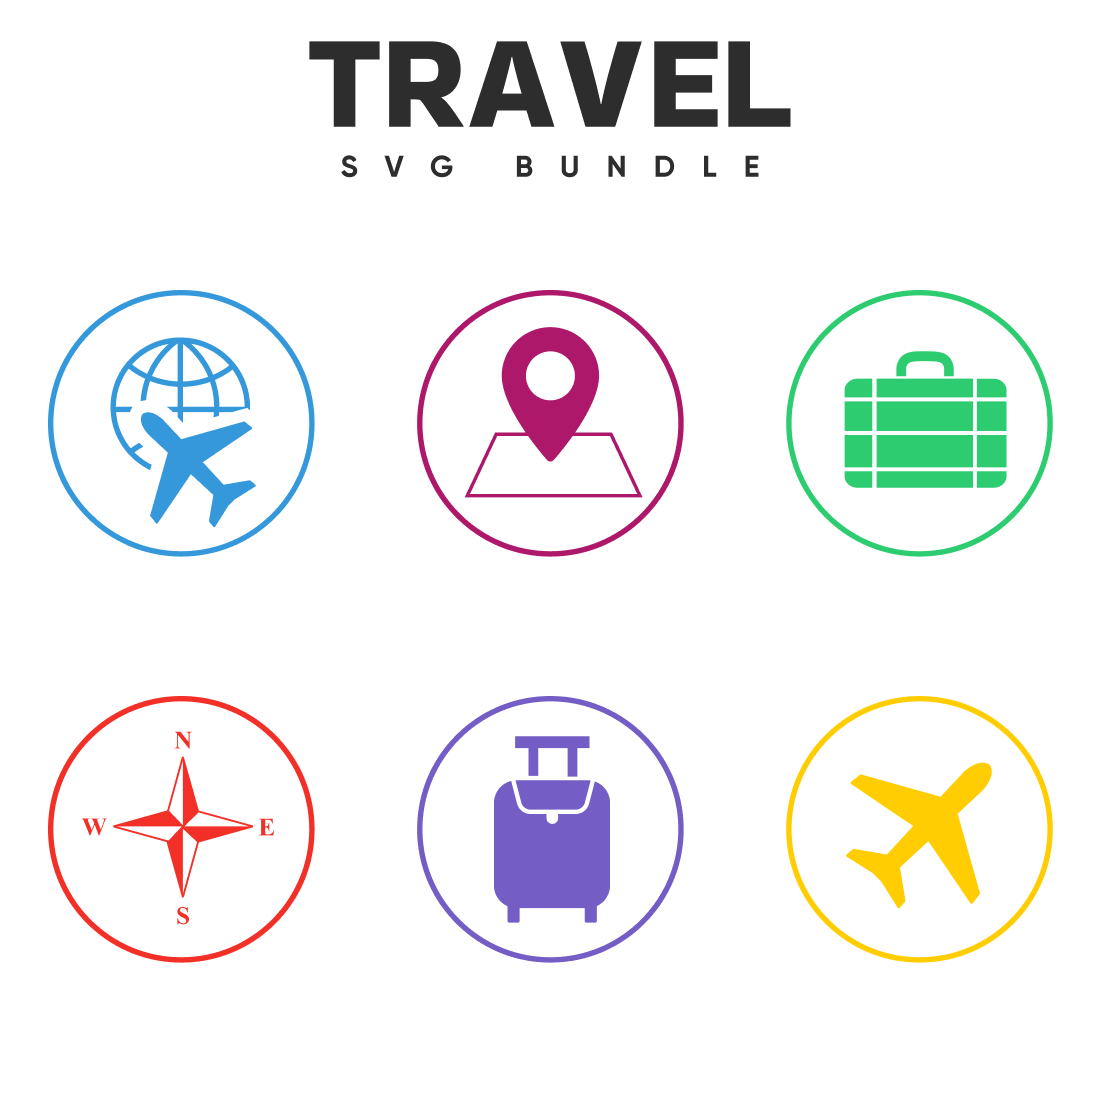 6 Travel SVG Files.